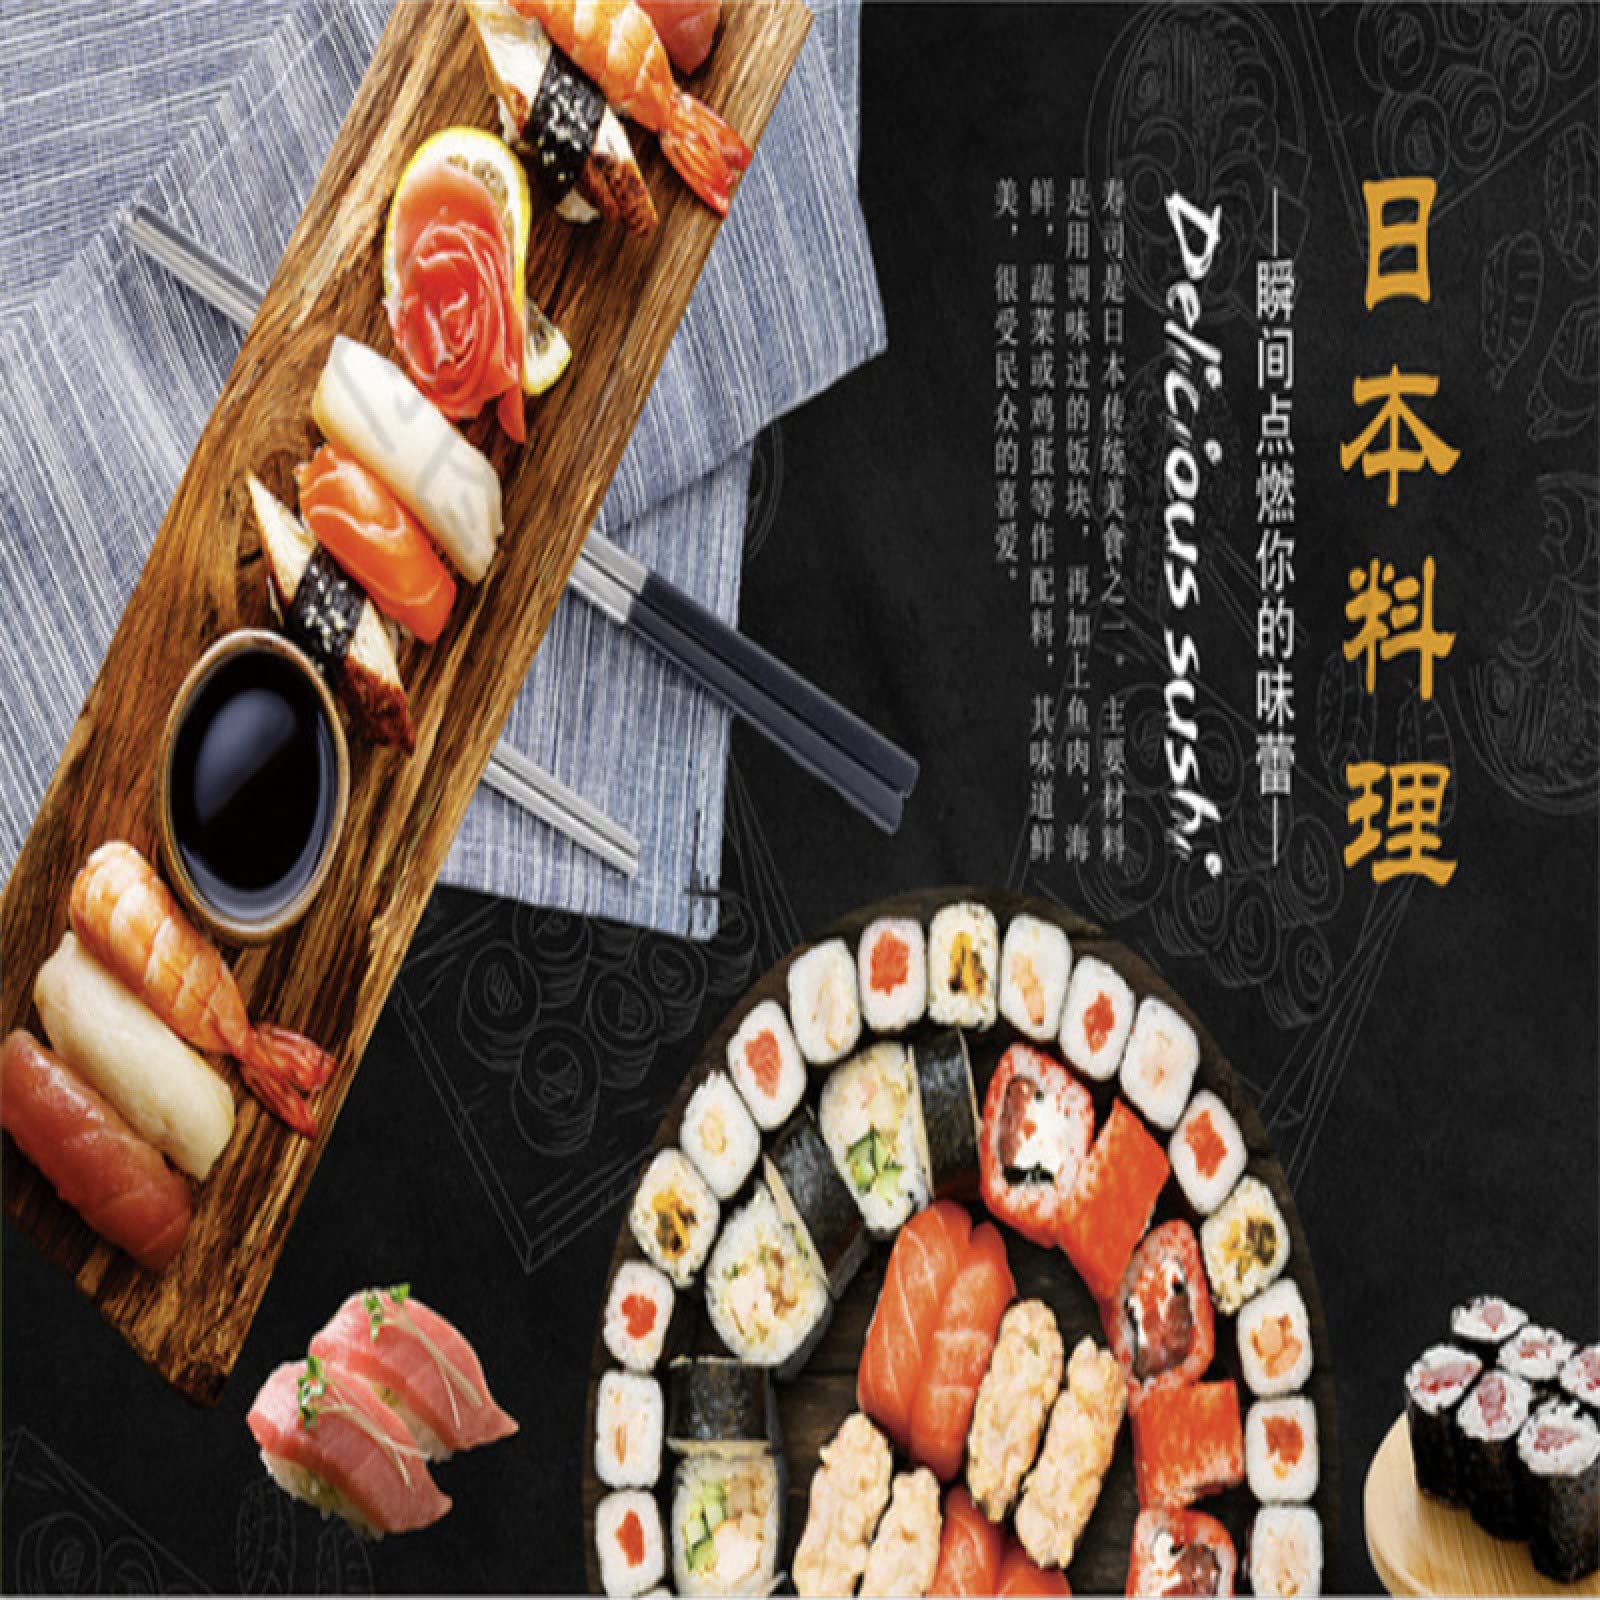 Modern Food Photo Wallpaper Decor Japanese Sushi Restaurant Black Background Mural Wall Paper 430Cmx300Cm